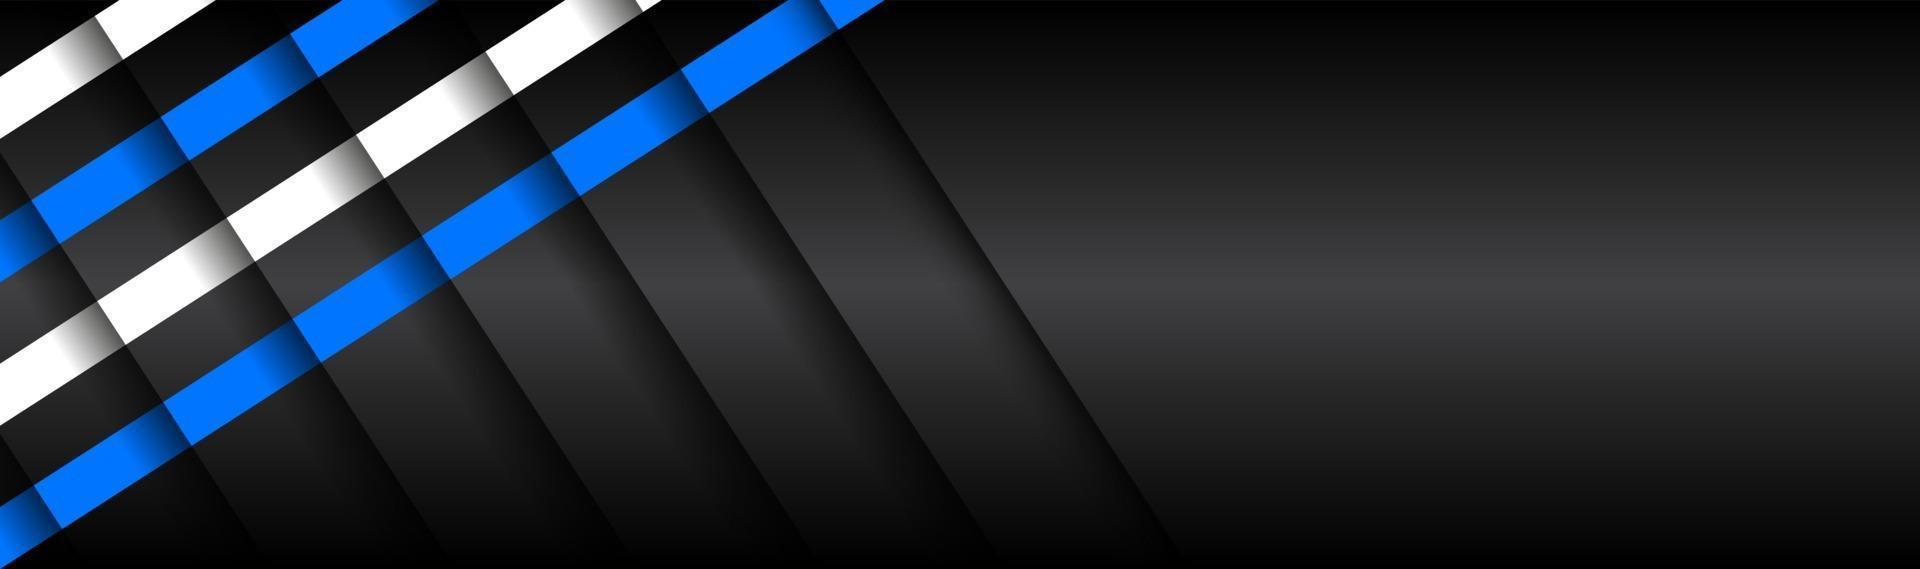 Banner de diseño de material negro con rayas diagonales azules y blancas cortadas por sombras Ilustración de vector de pantalla ancha de encabezado web moderno